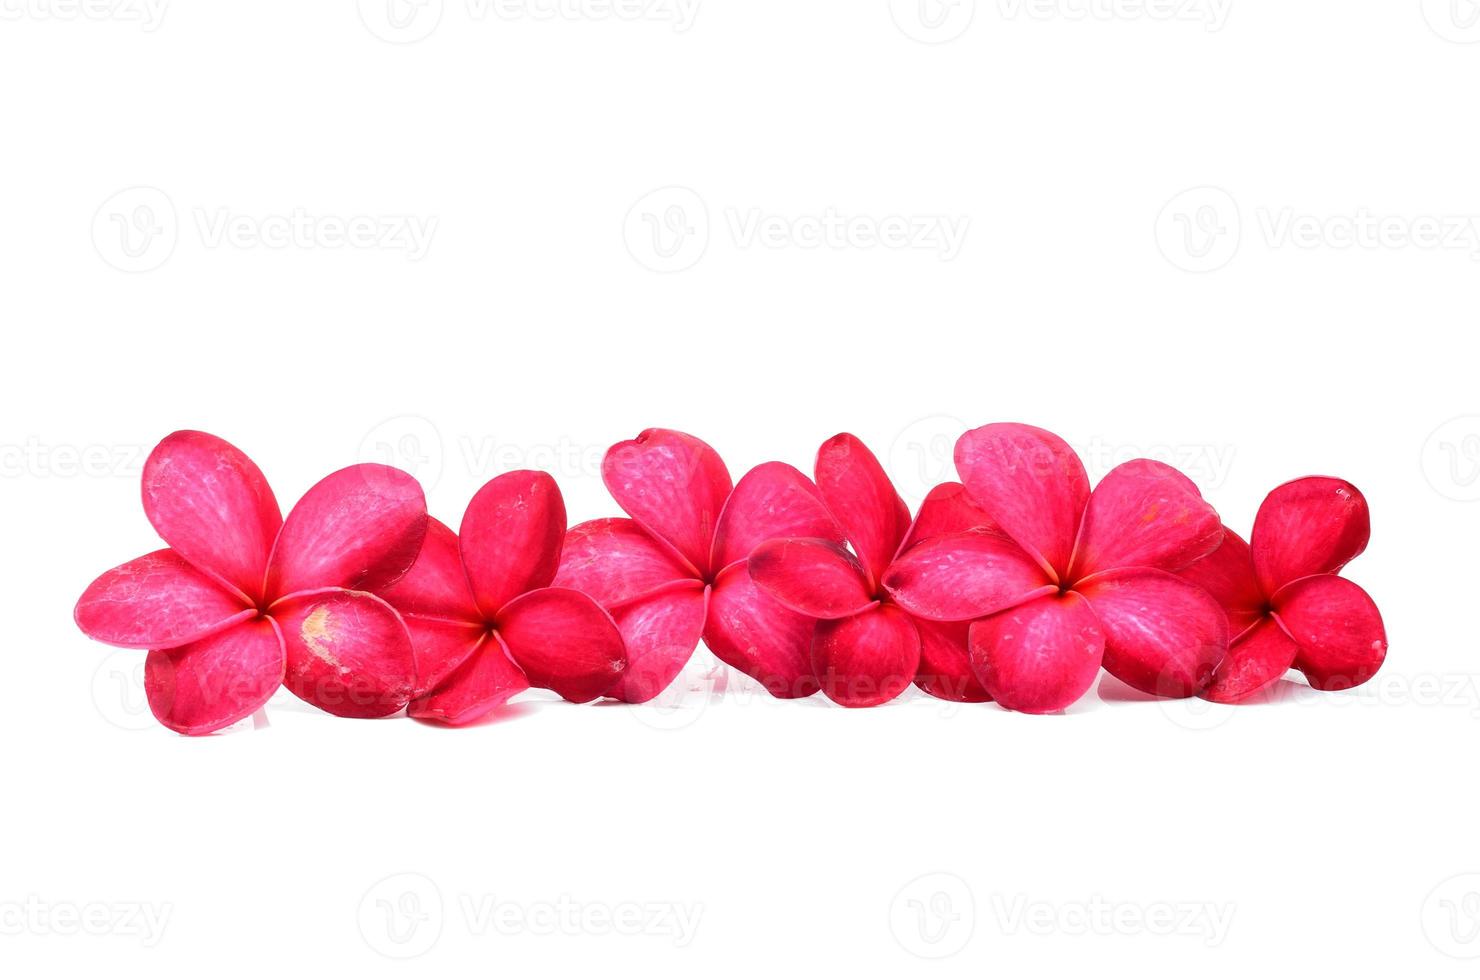 prachtige frangipani bloemen foto